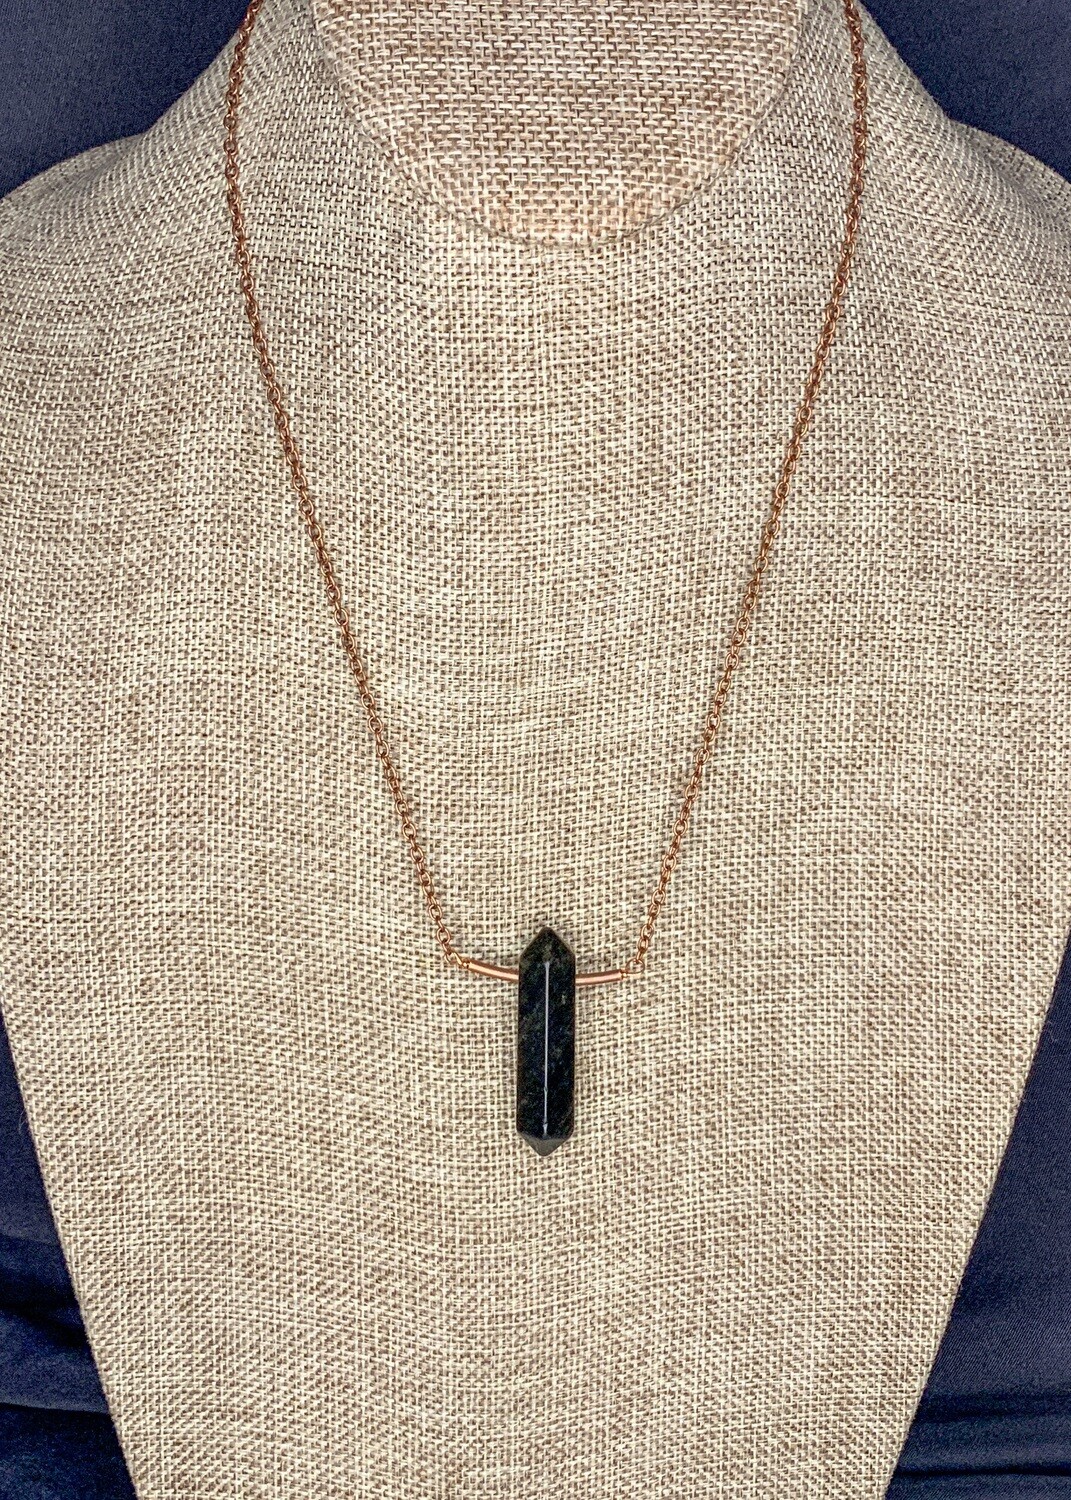 Obsidian Boho Necklace